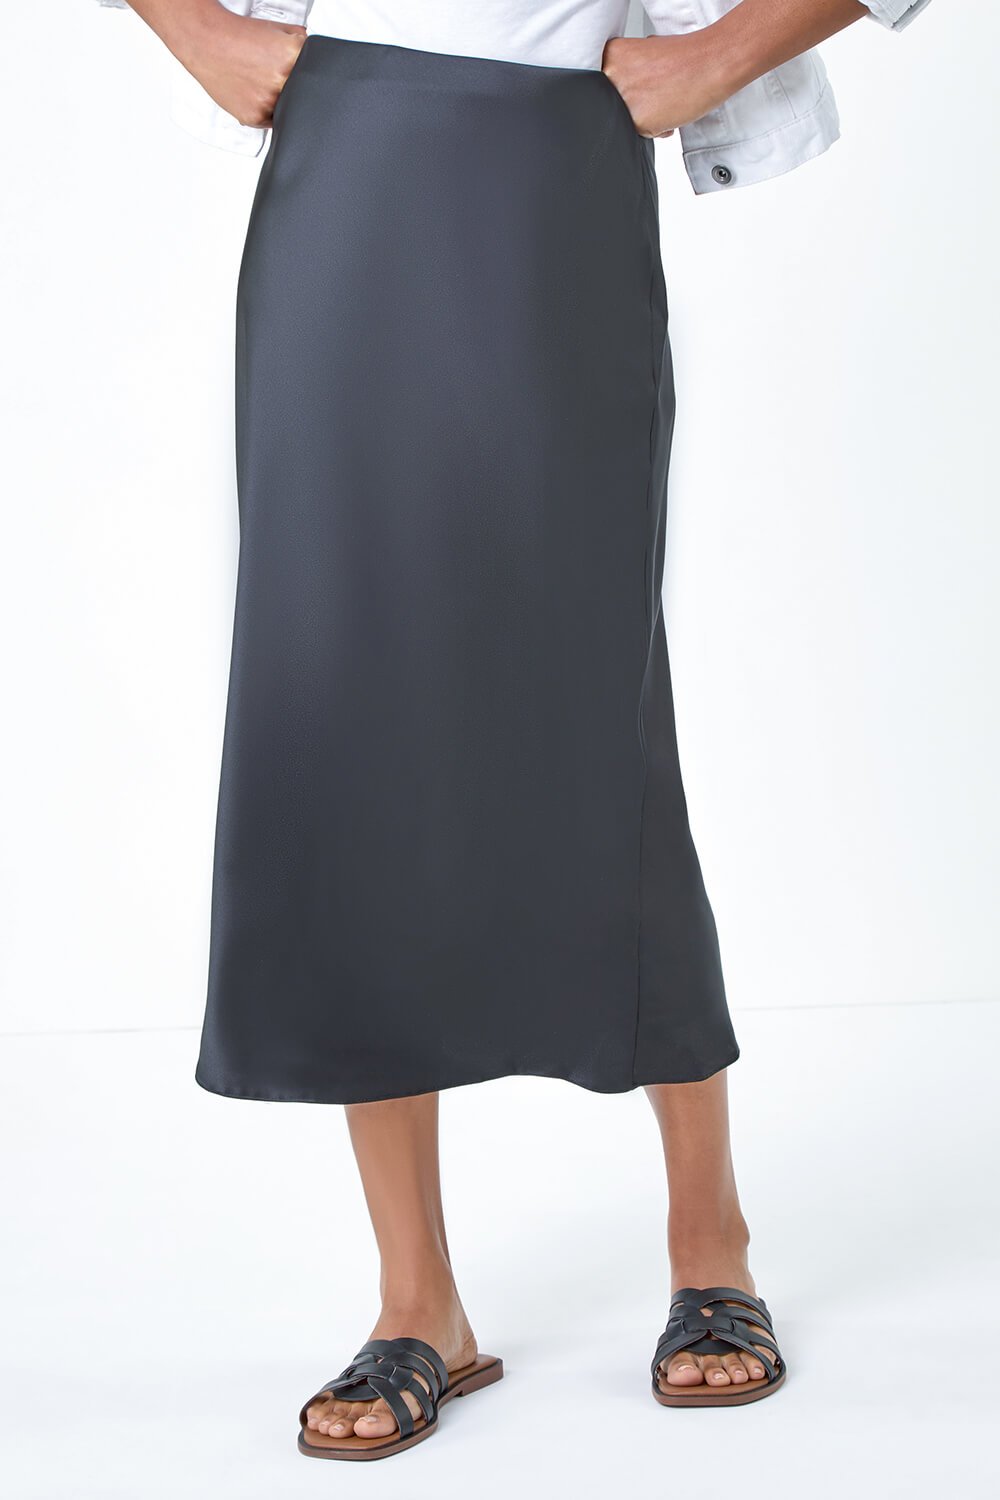 Black Satin Bias Cut Midi Skirt, Image 4 of 5